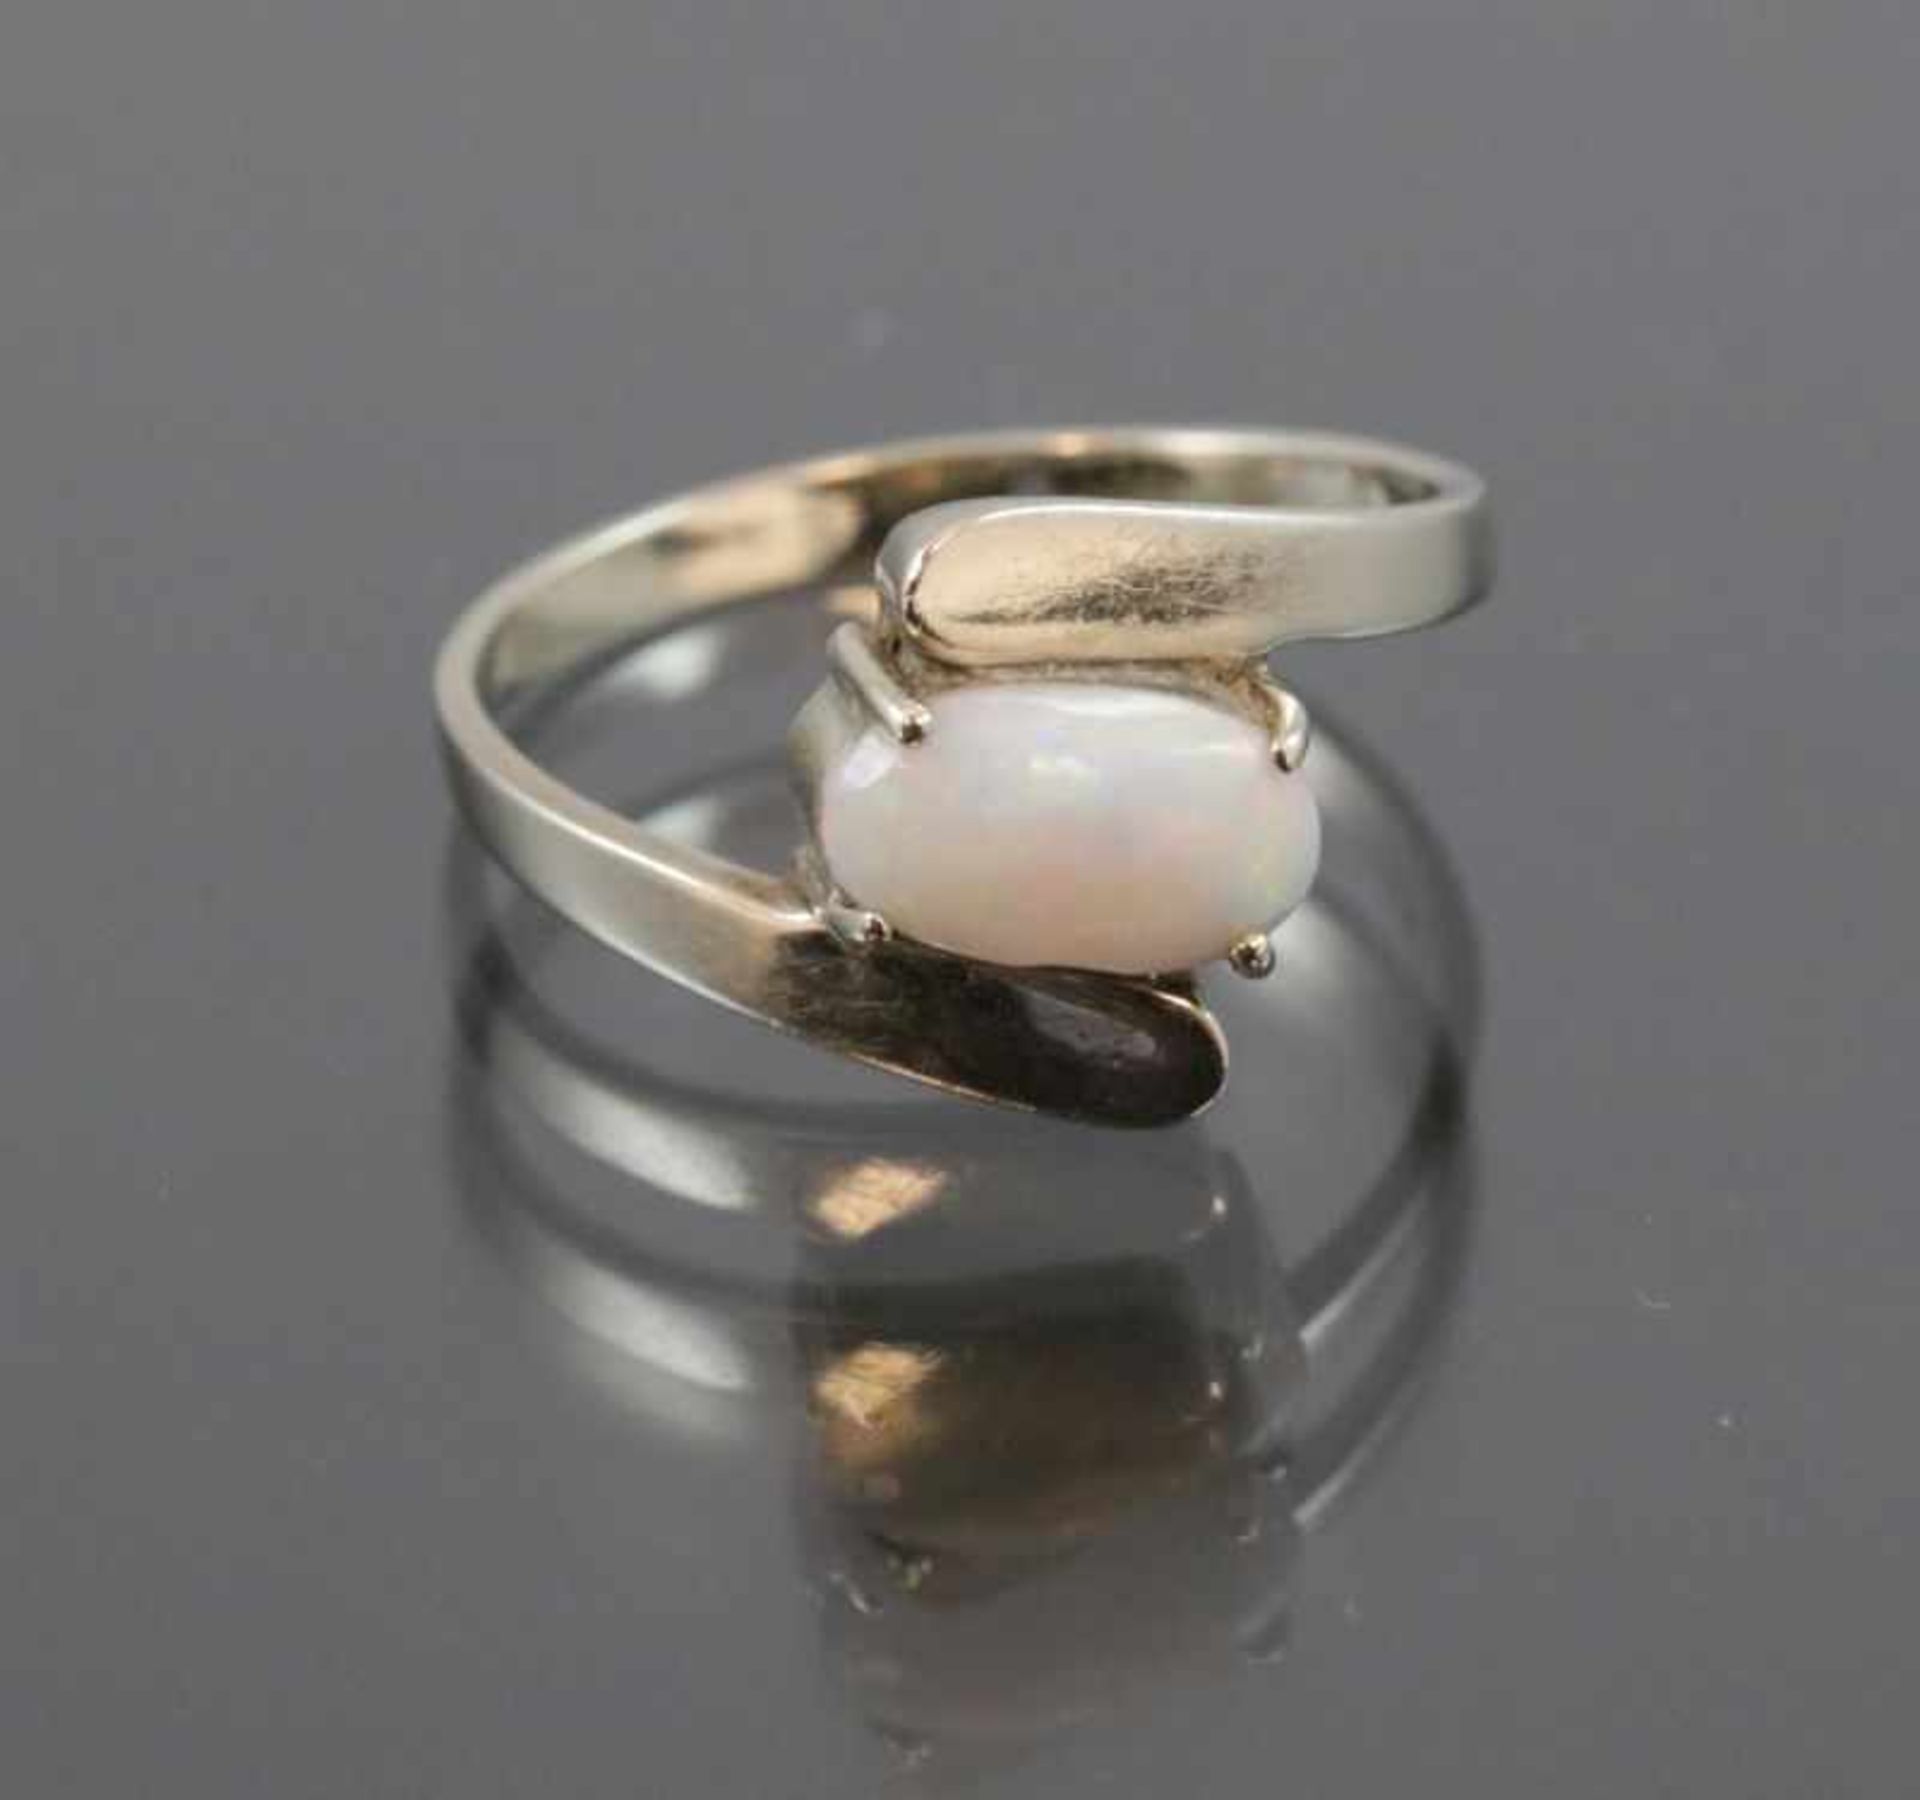 Opal-Ring, 585 Gold3,4 Gramm Ringgröße: 58- - -25.00 % buyer's premium on the hammer price, VAT